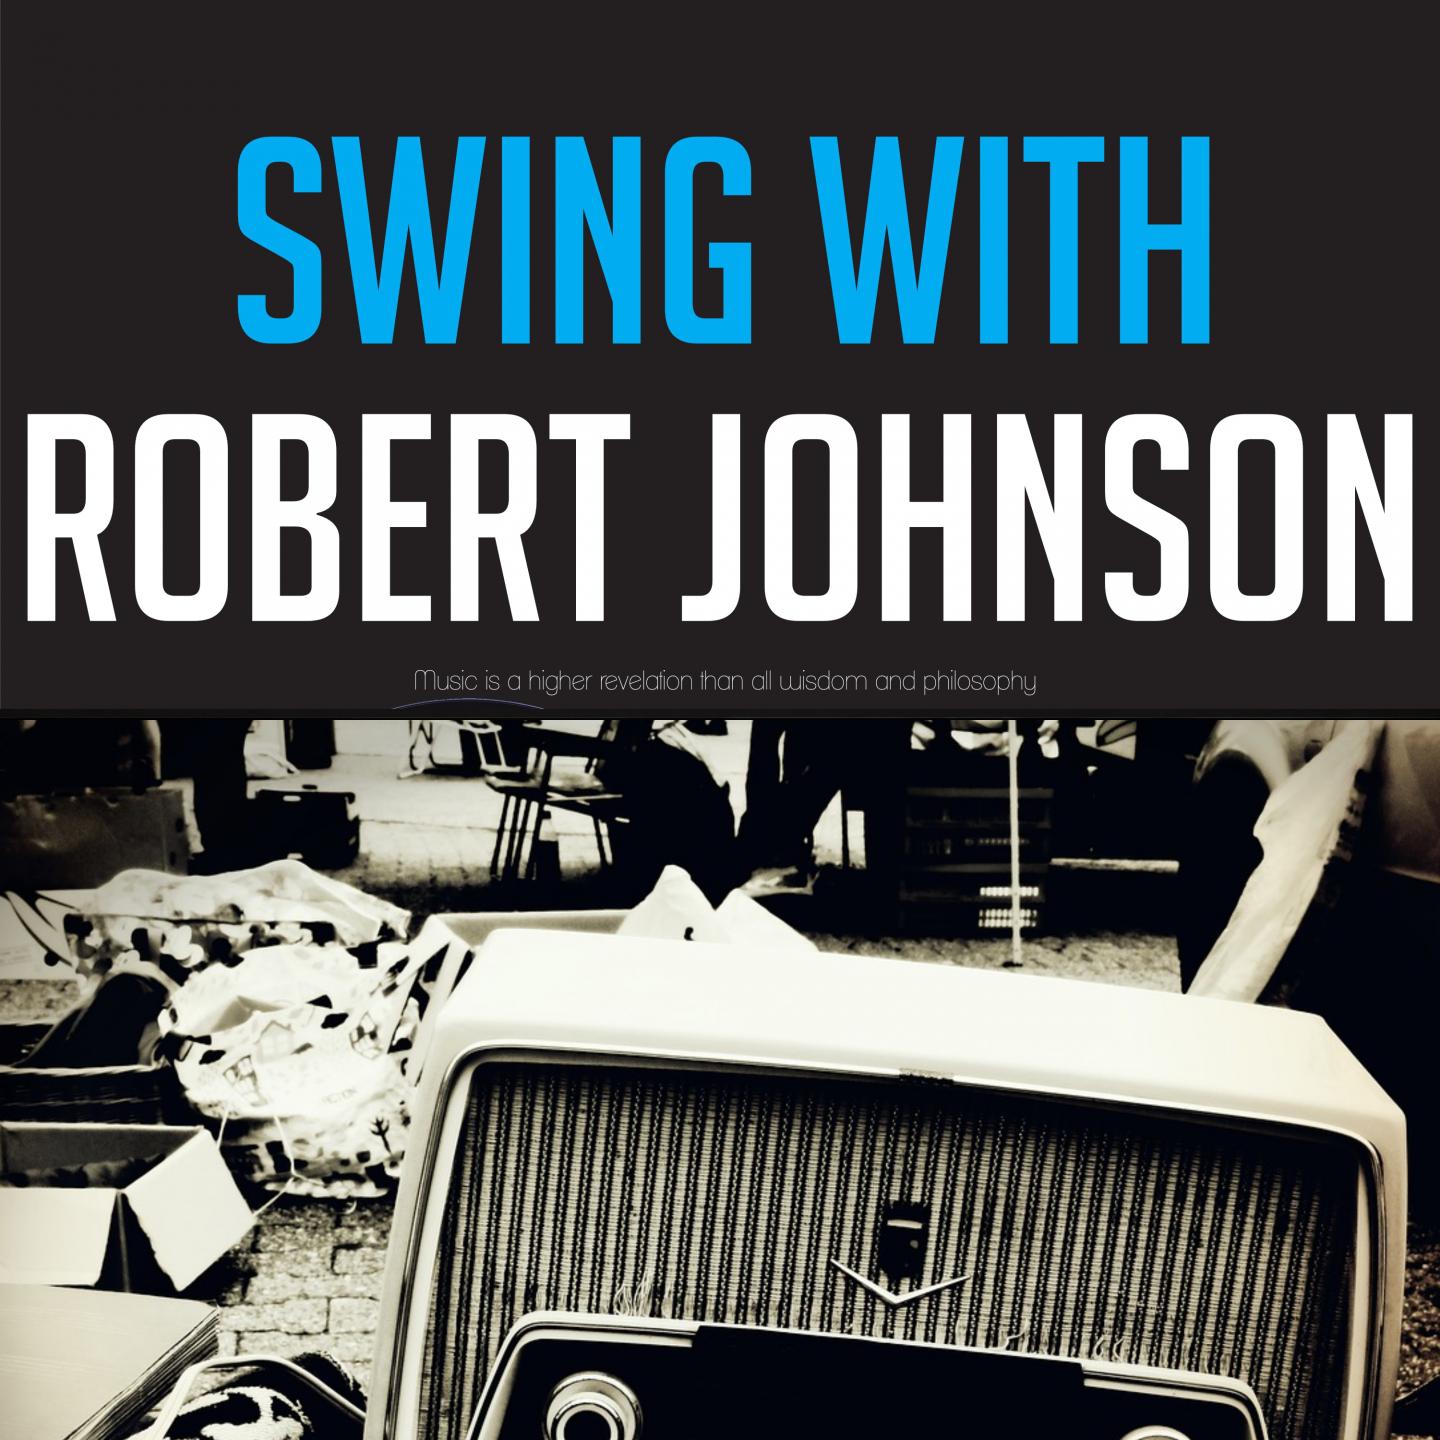 Swing with Robert Johnson